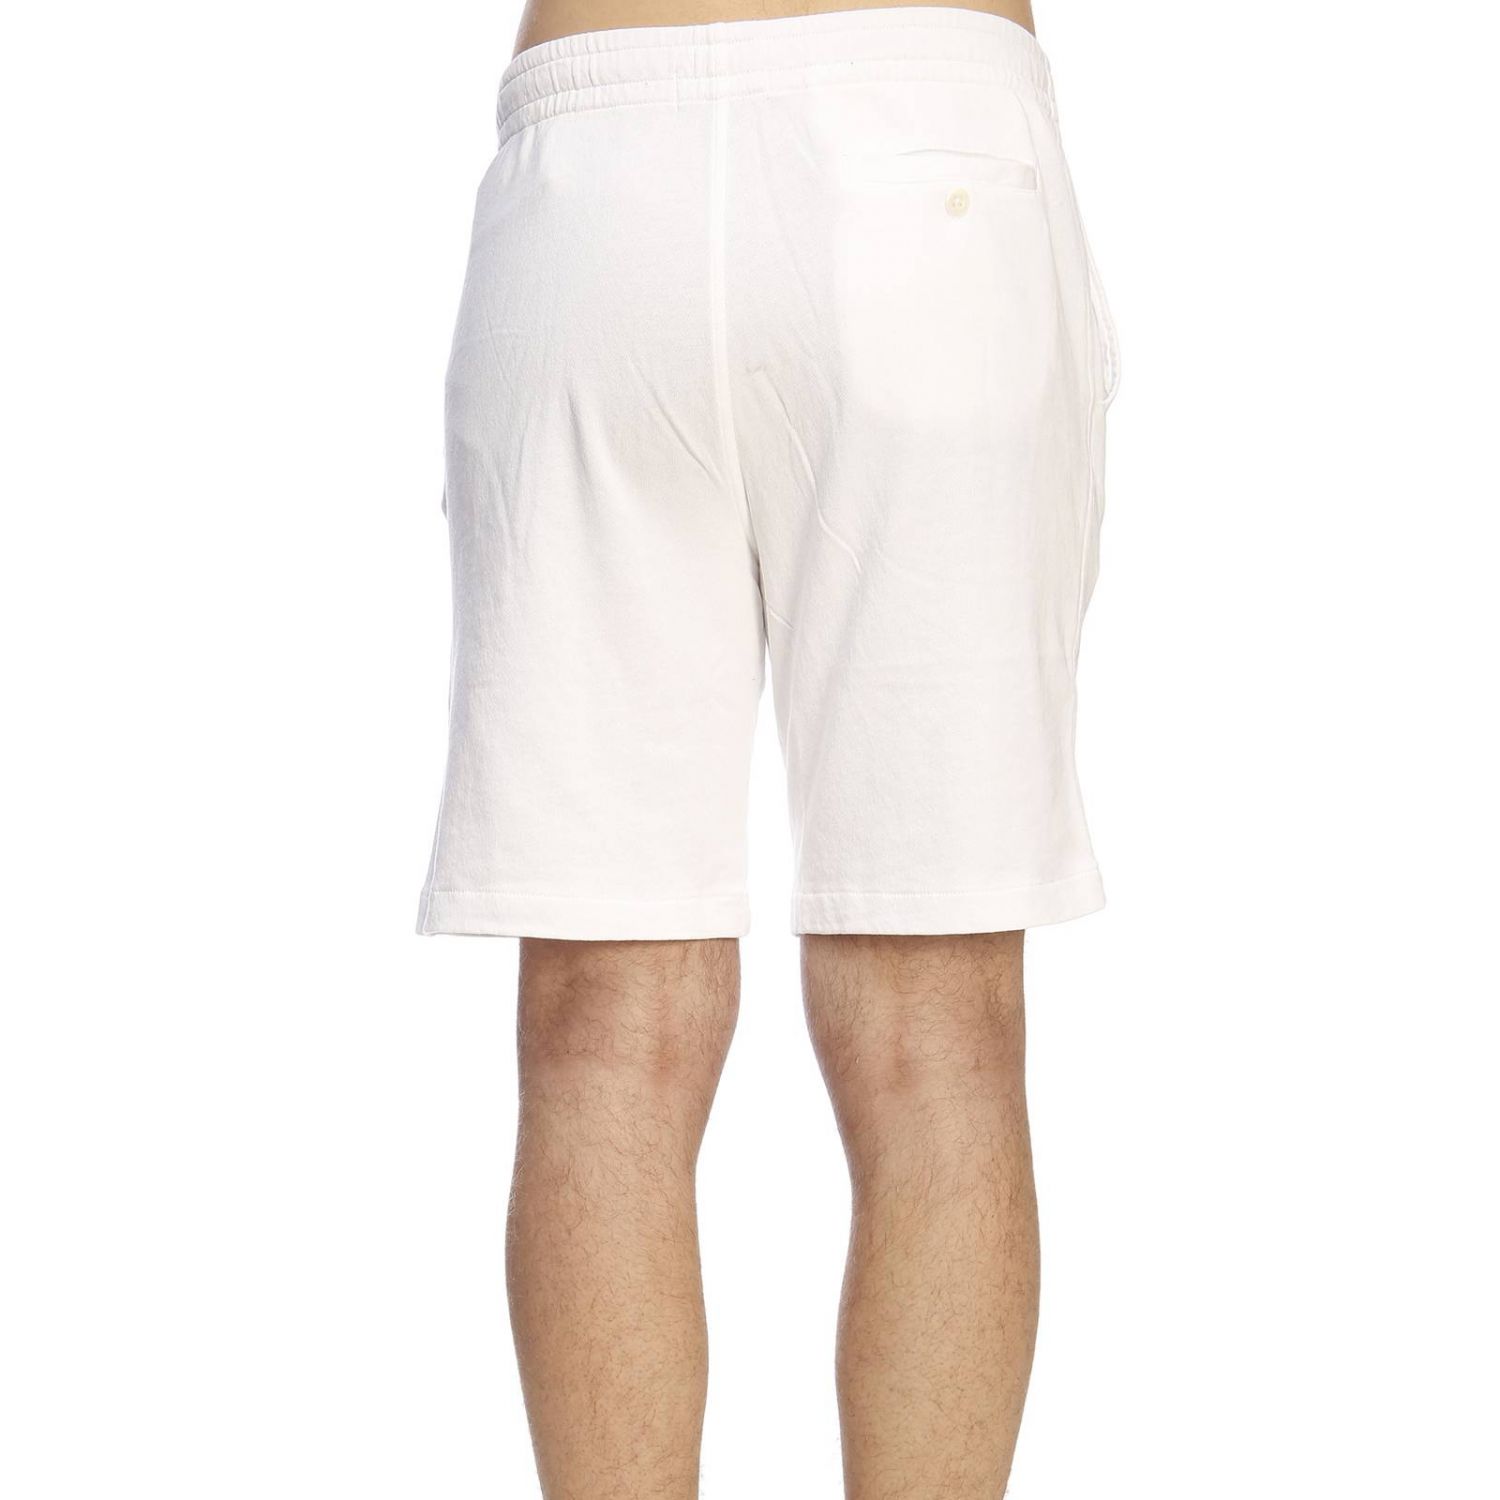 Polo Ralph Lauren Outlet: trousers for men - White | Polo Ralph Lauren ...